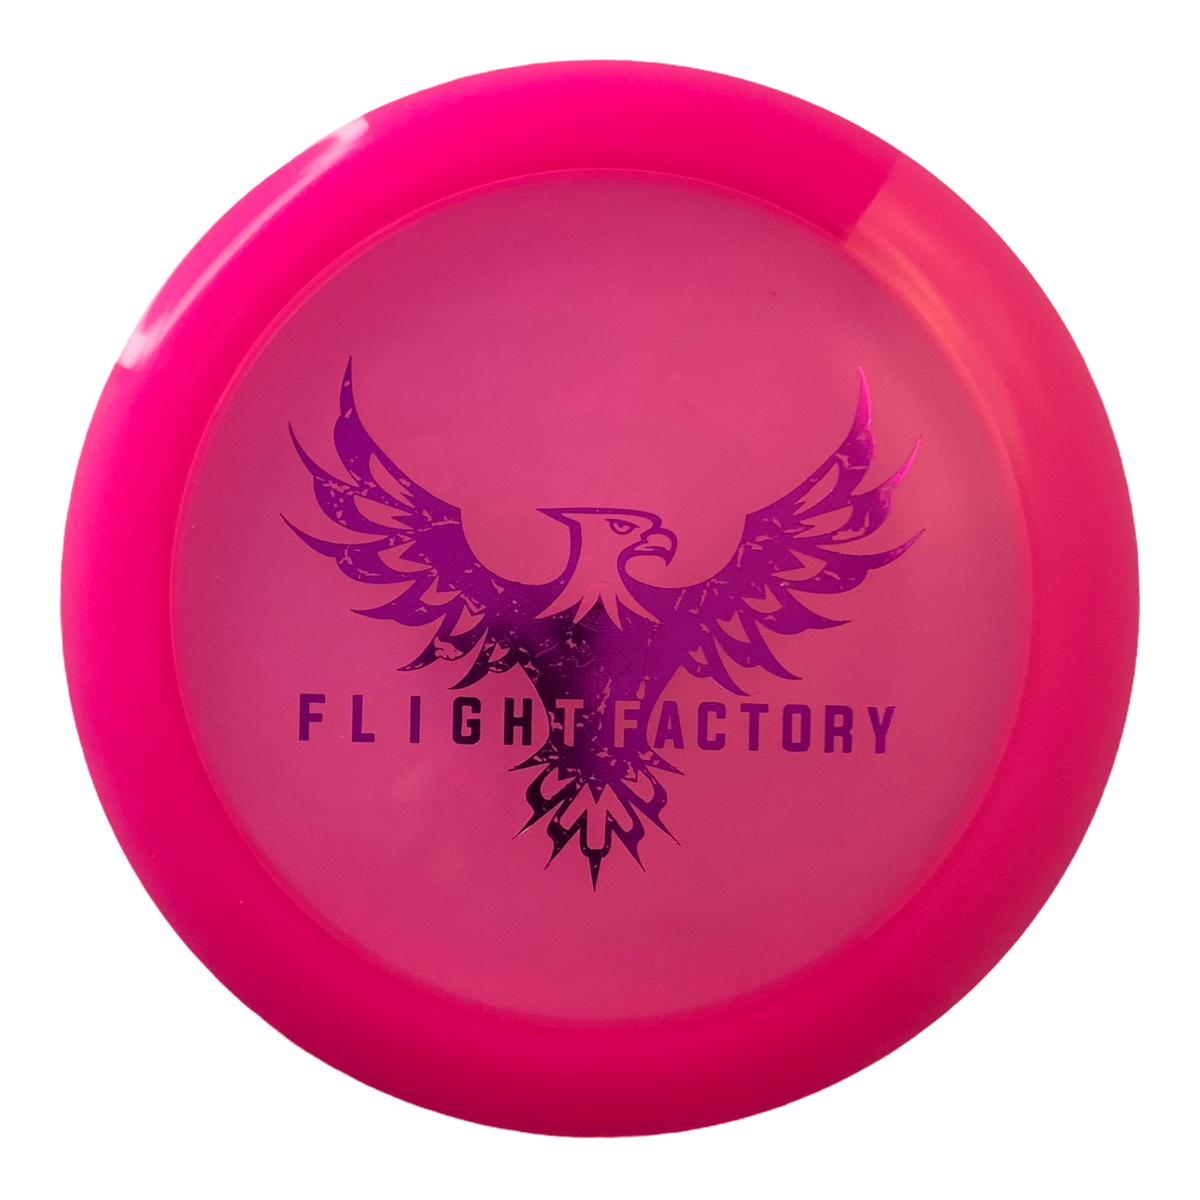 Flight Factory Eagle Lucid Raider